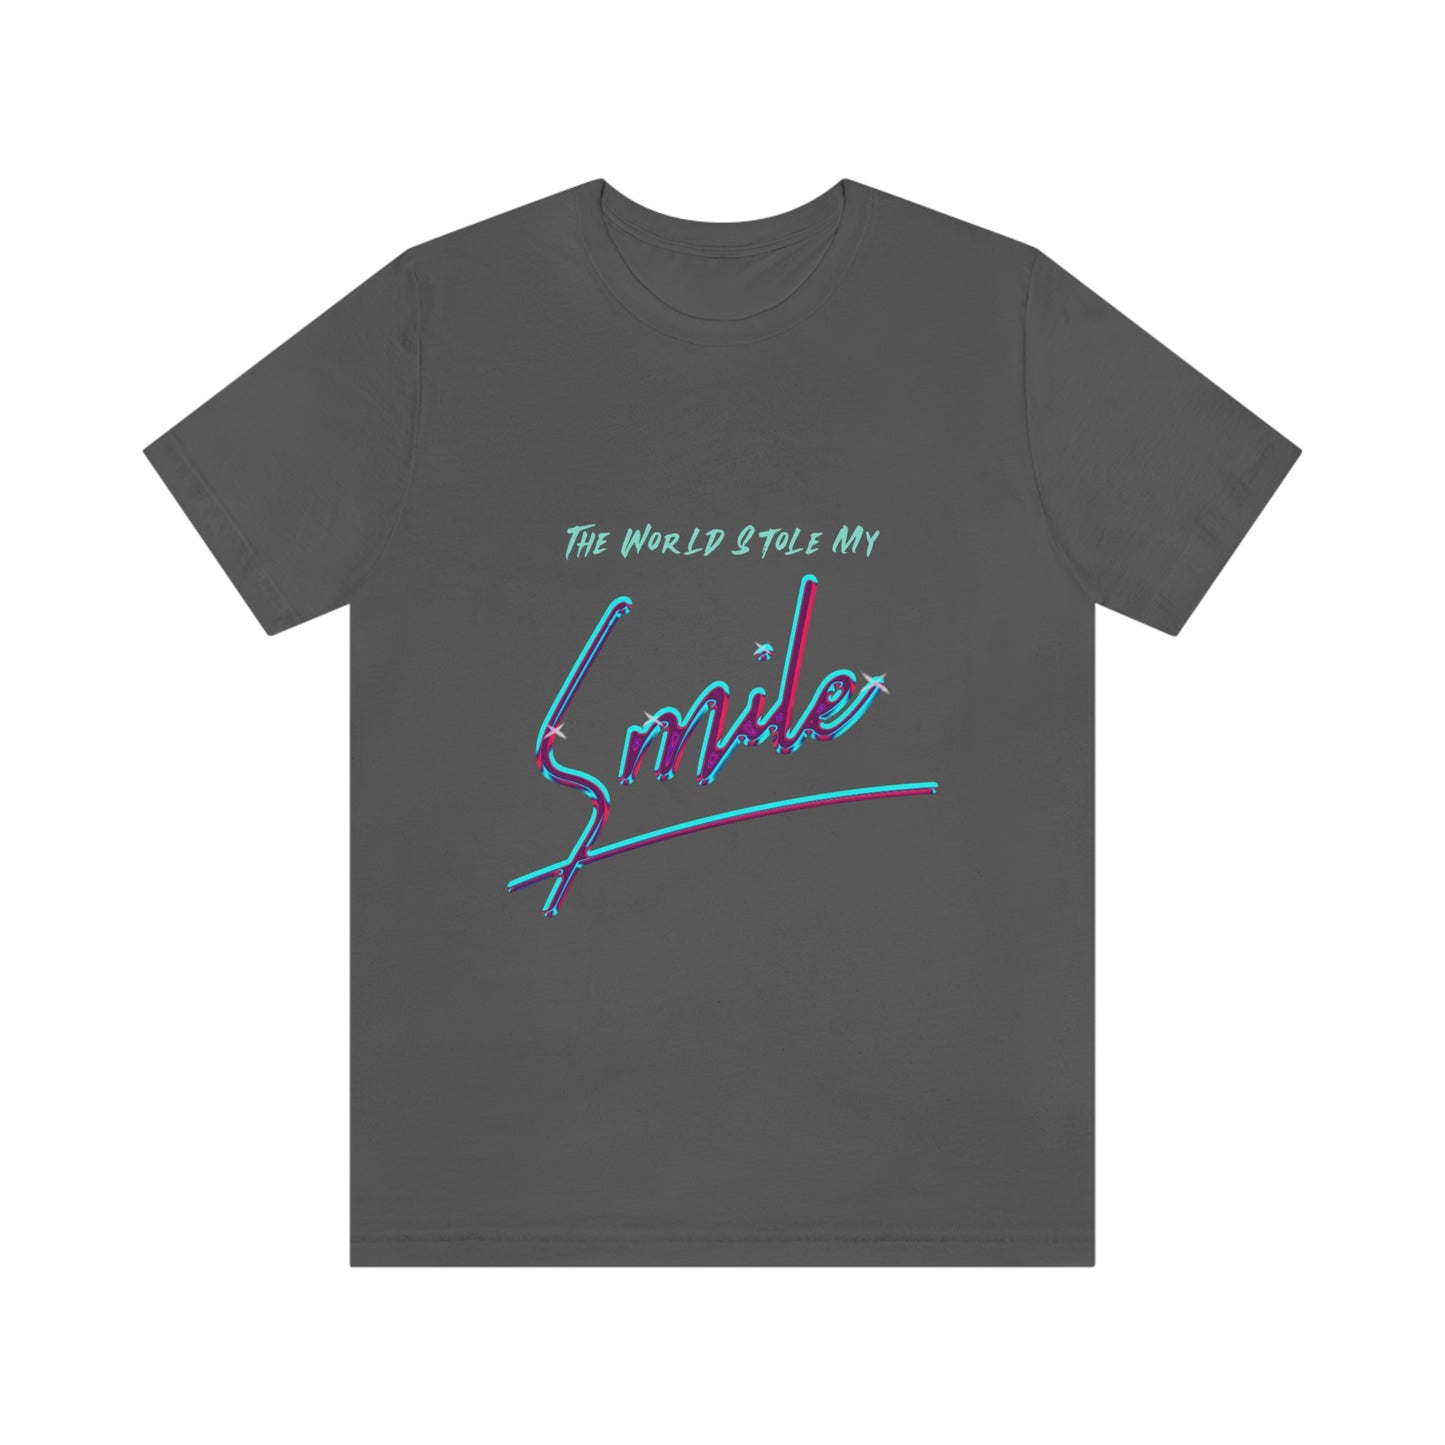 The World Stole My Smile - Unisex T-Shirt